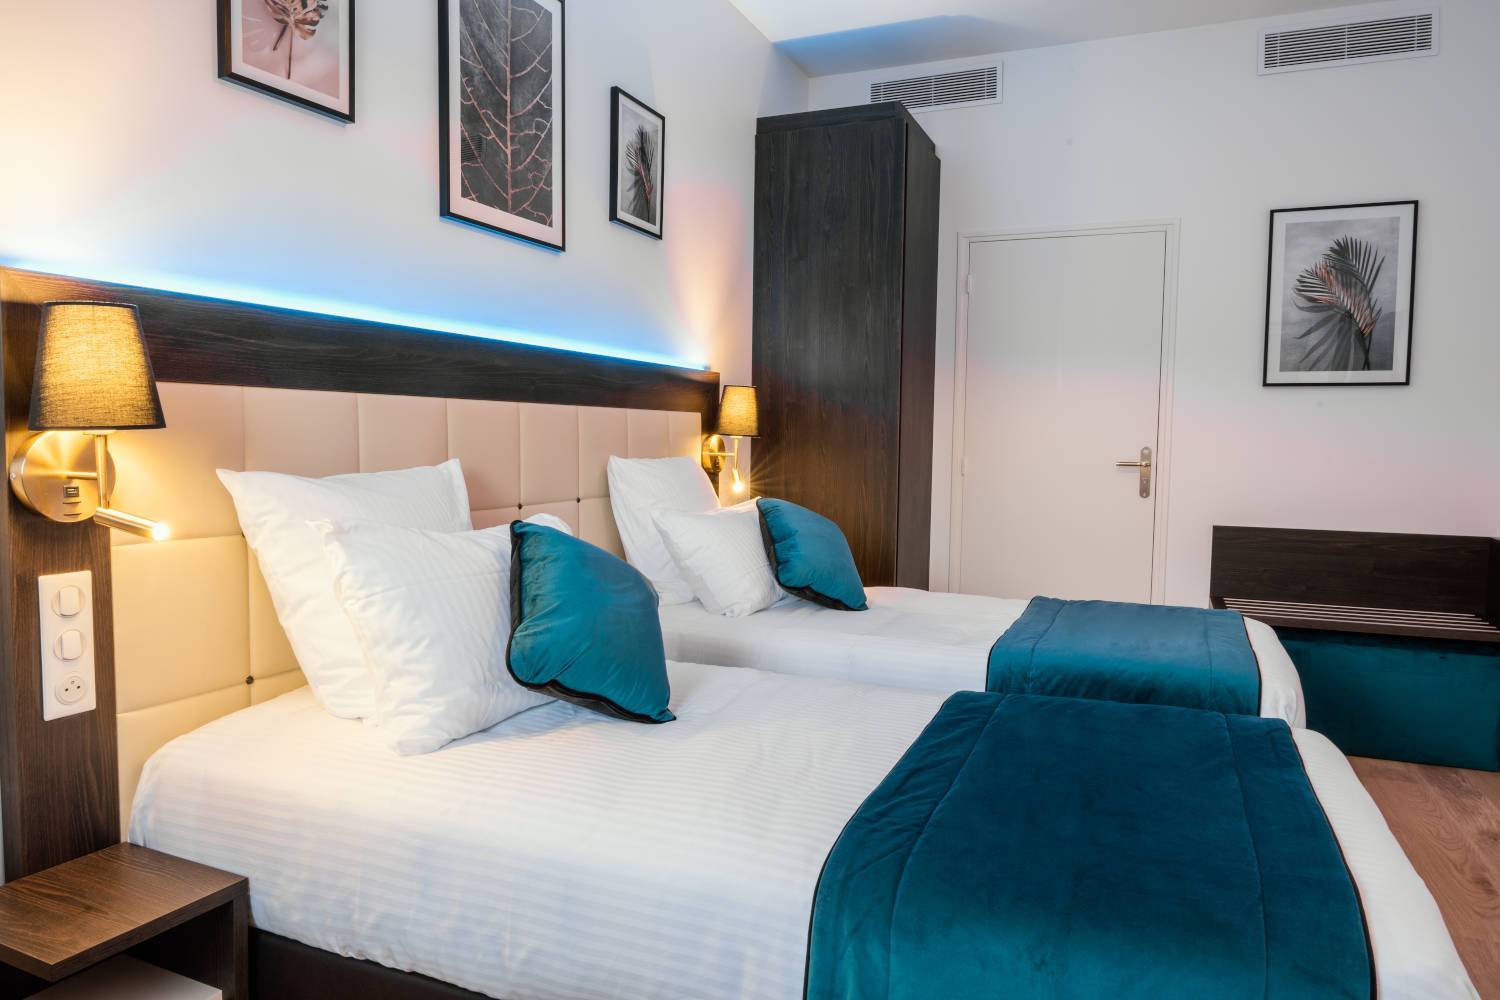 Double beds | Les Cottages de France, hotel near CDG airport and Villepinte